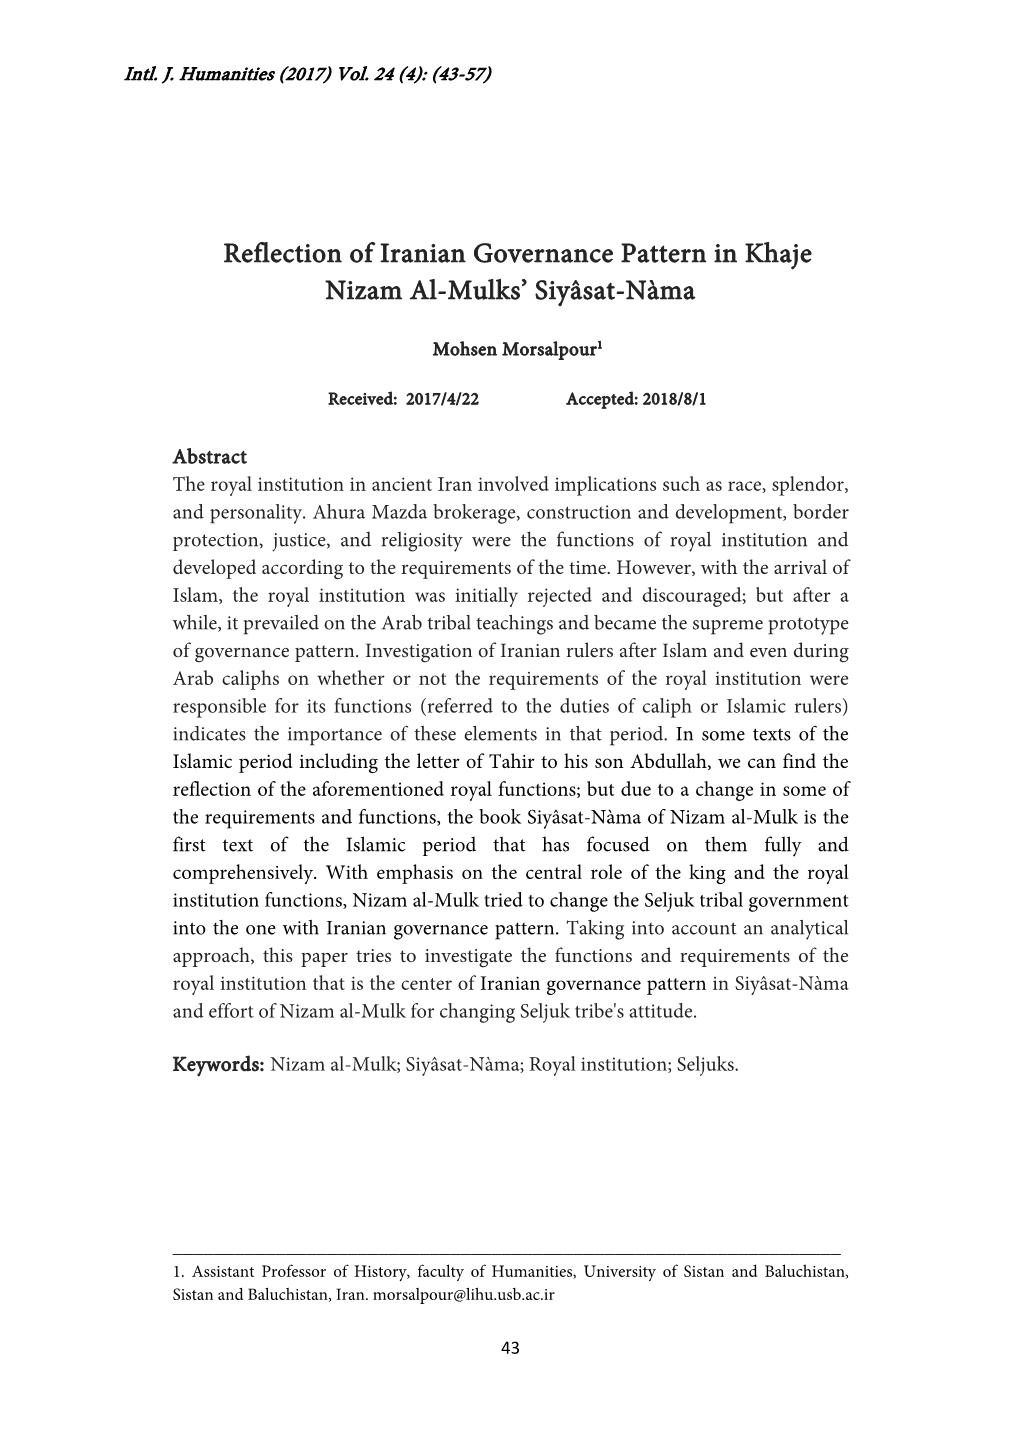 Reflection of Iranian Governance Pattern in Khaje Nizam Al-Mulks' Siyâsat-Nàma